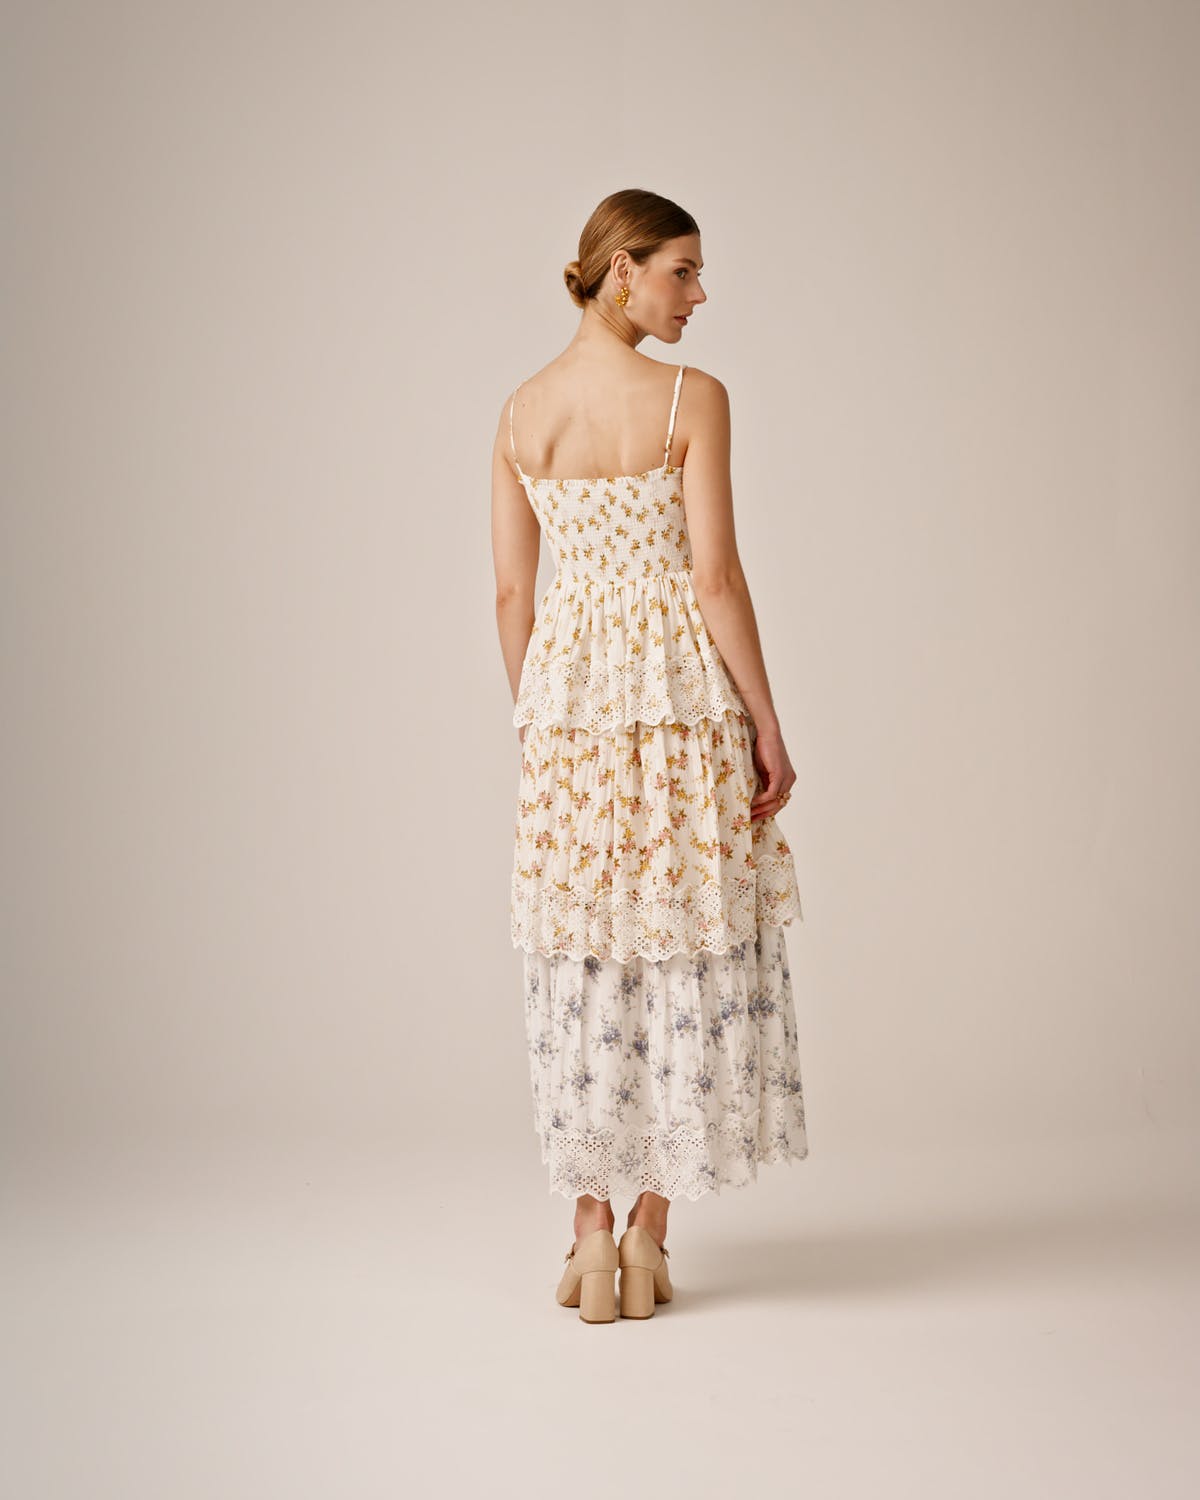 Cotton Slub Layered Dress, Flower Combo. Image #3